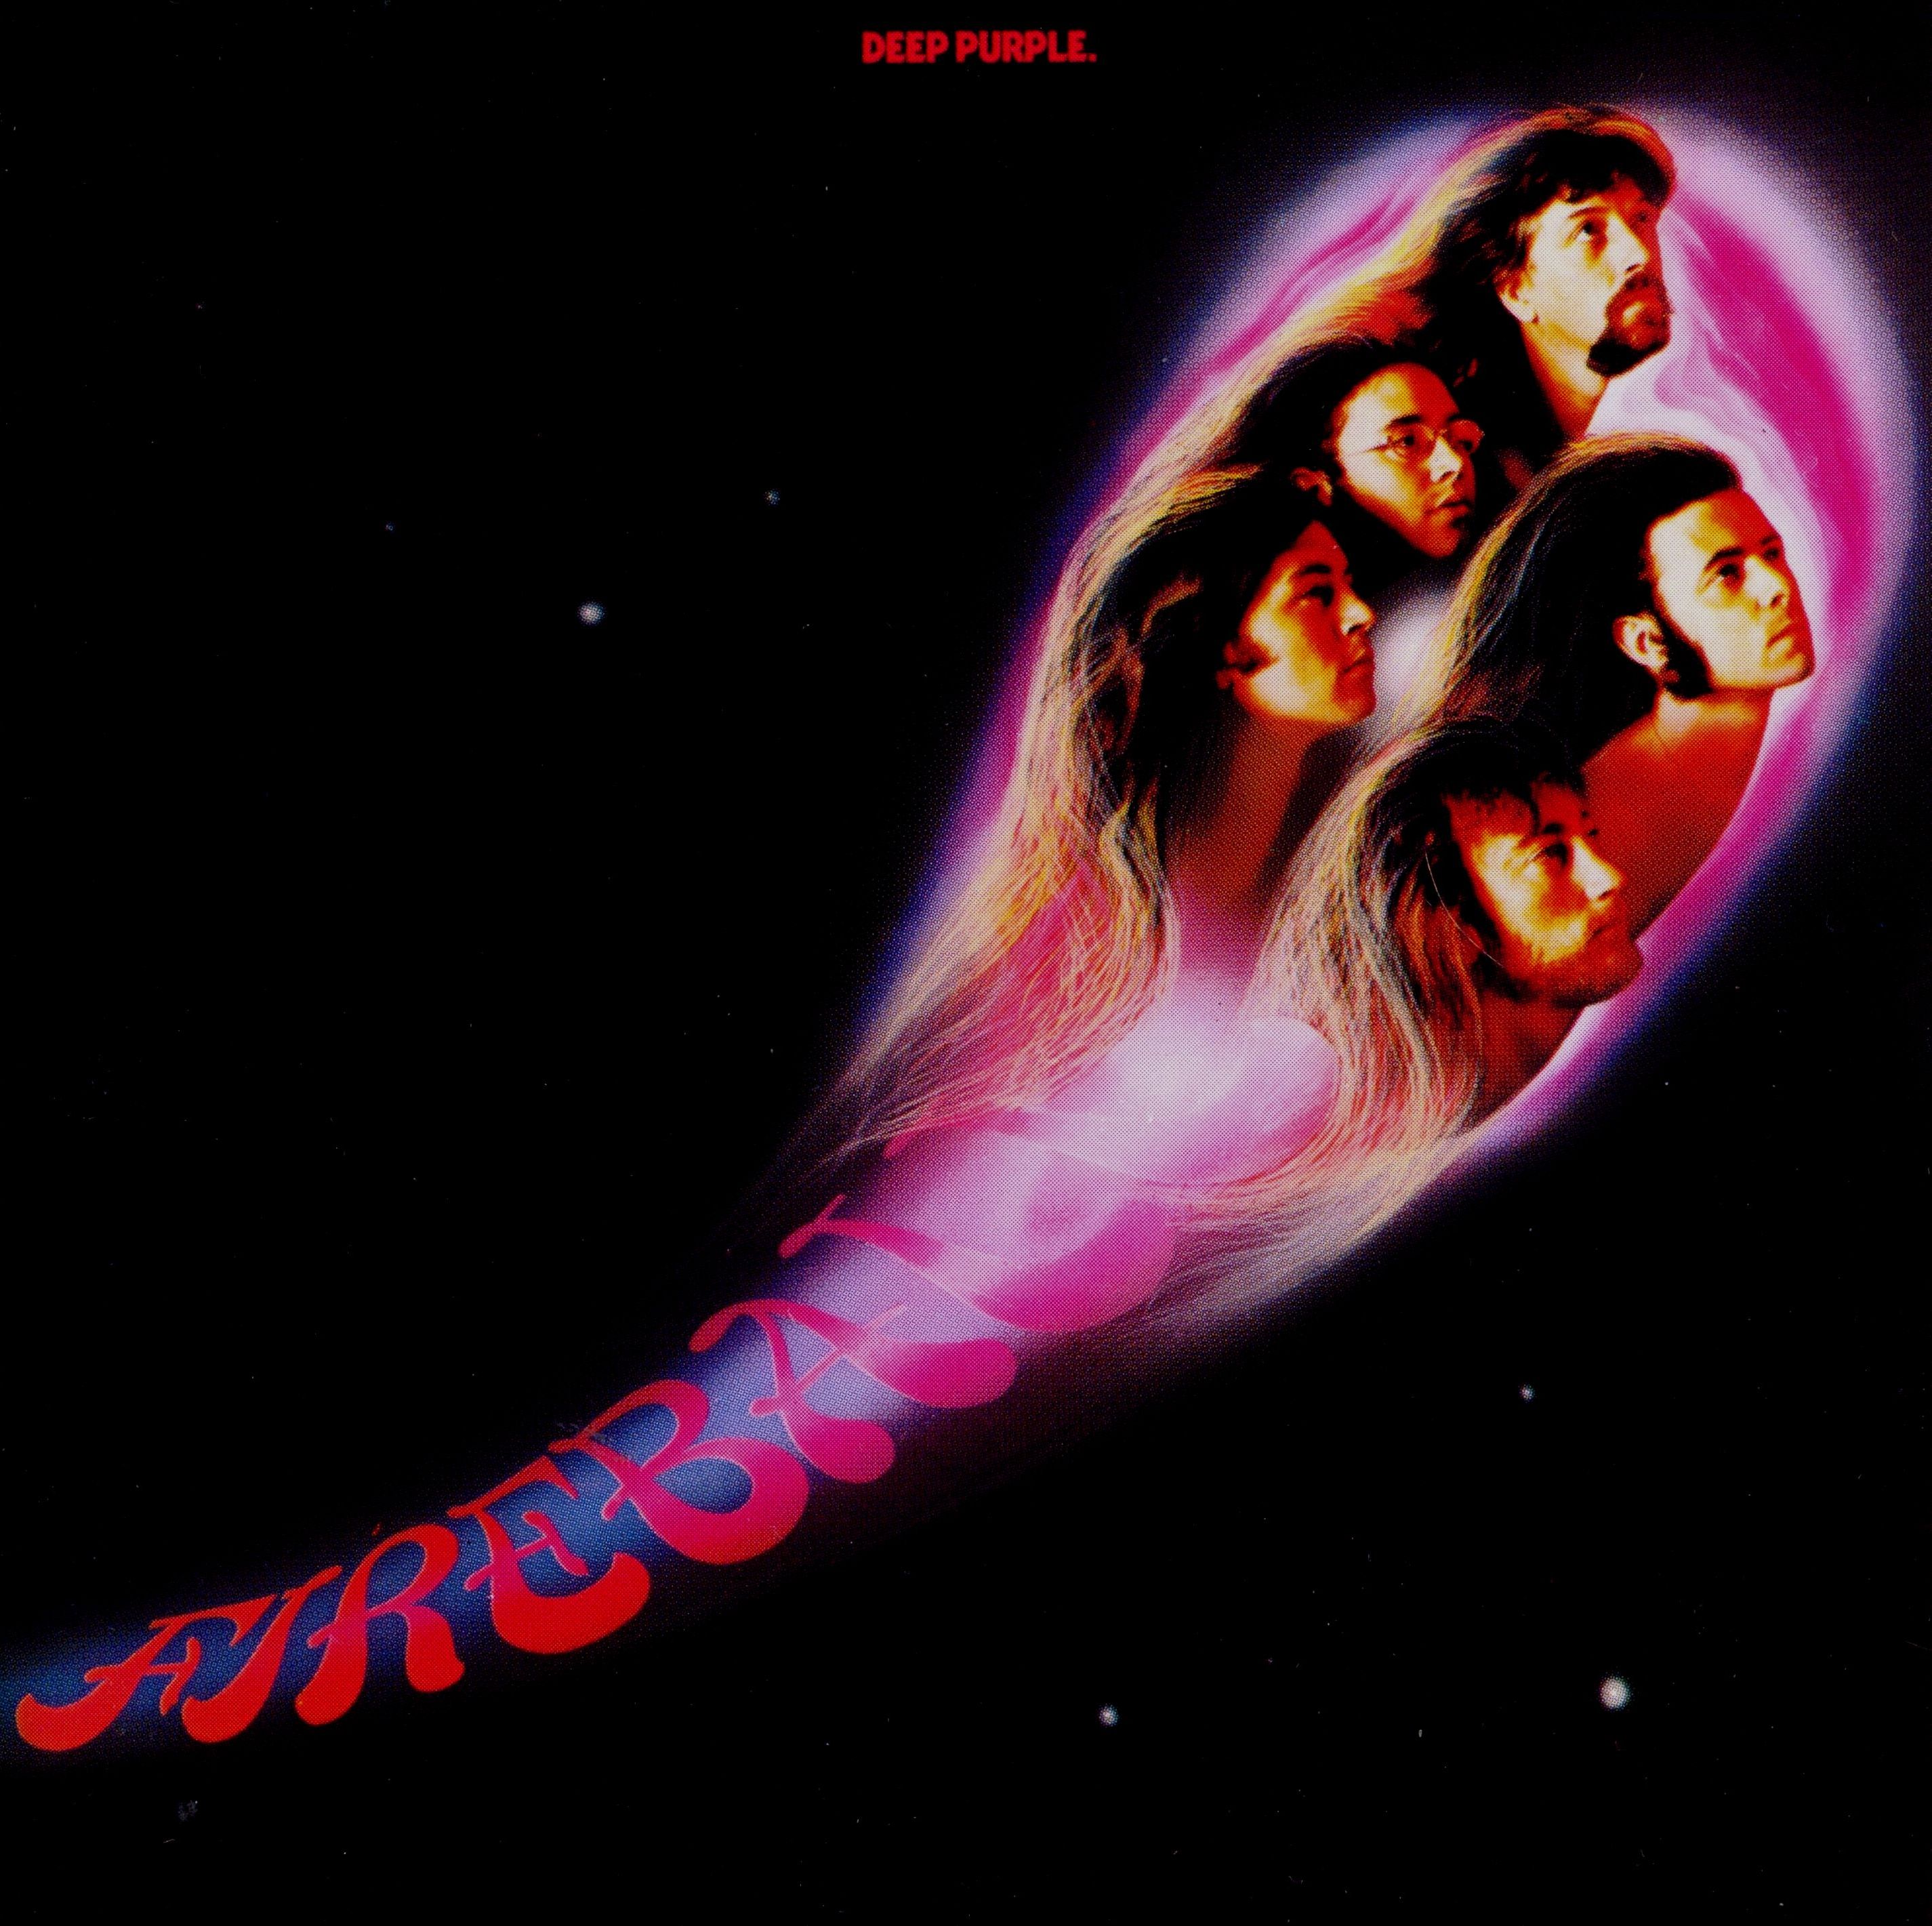 Deep Purple - Fireball (1971/2016) [HDTracks FLAC 24bit/96kHz]